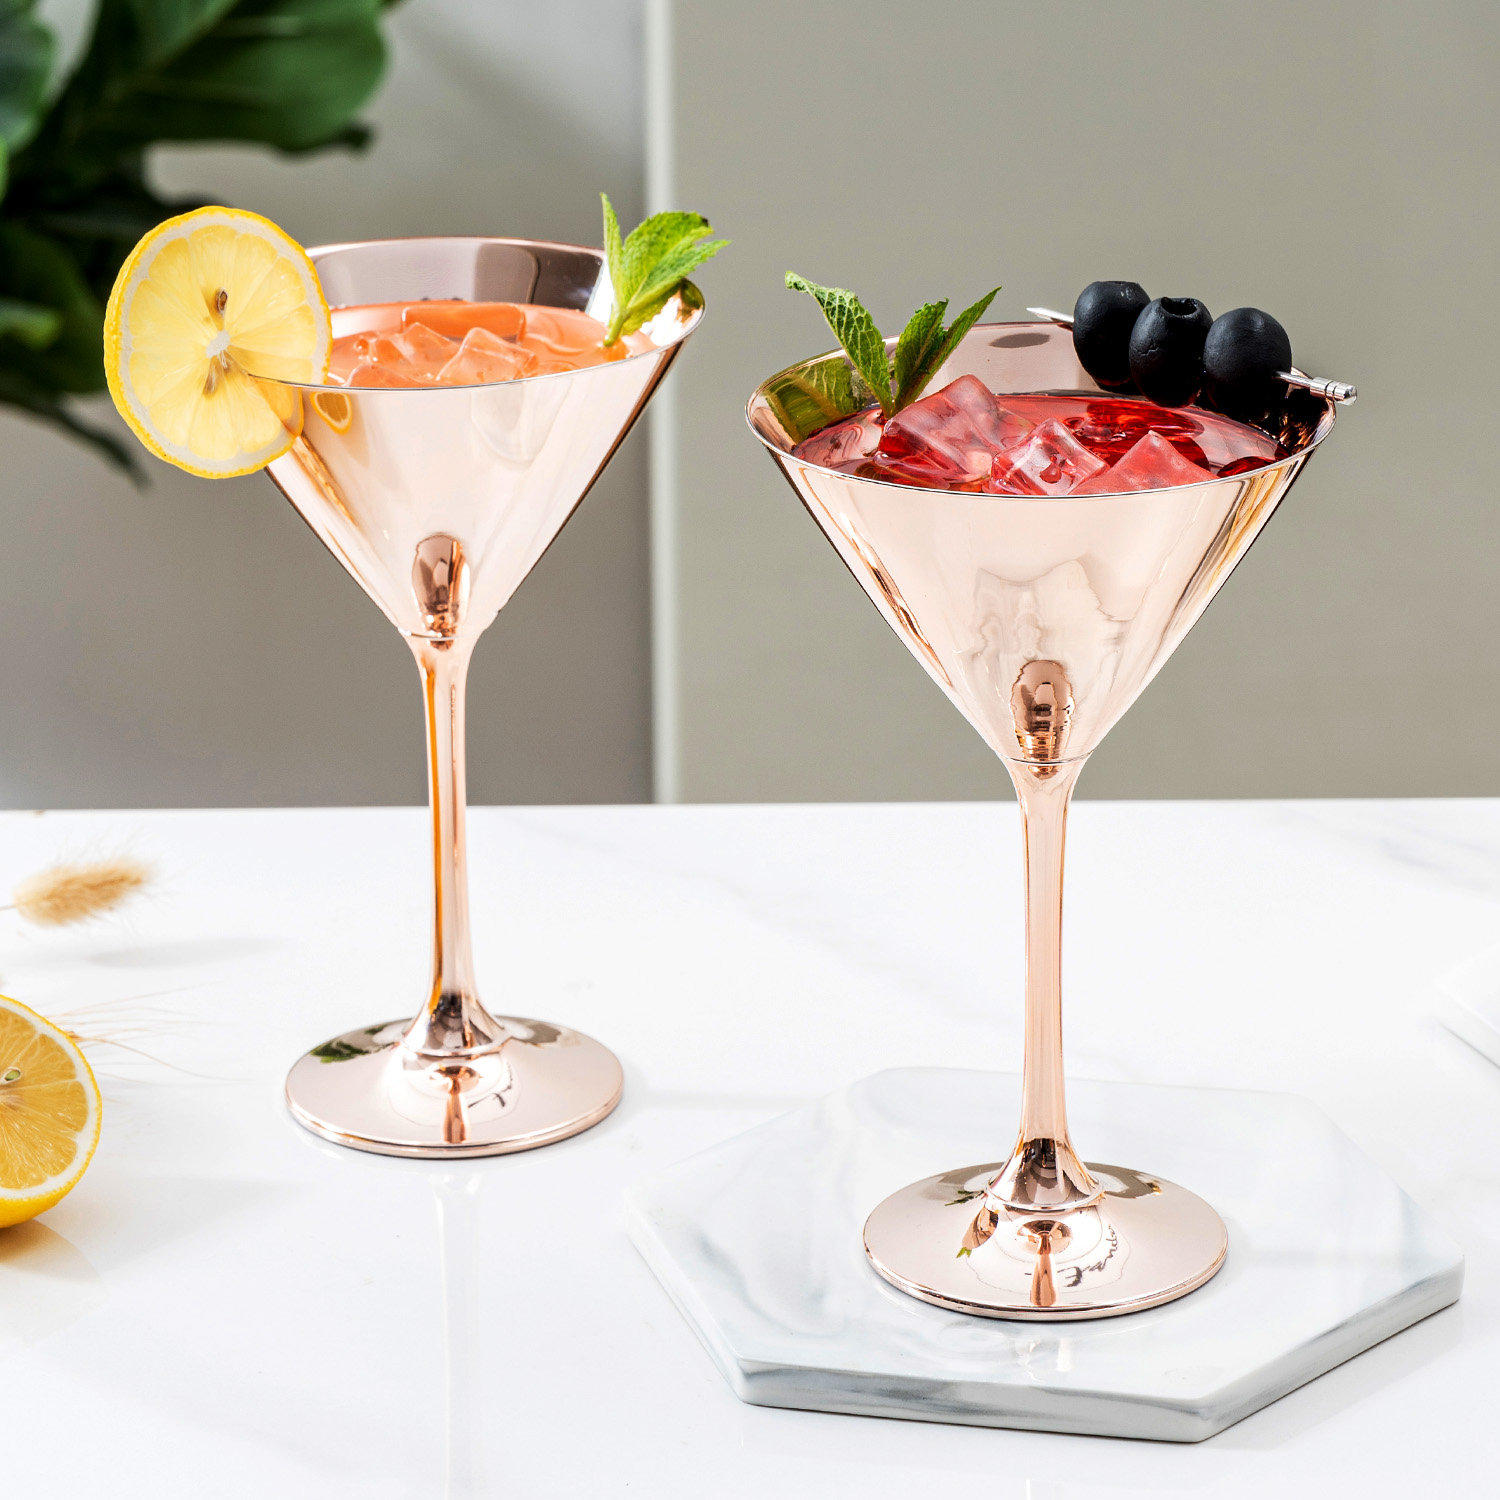 Libbey Cosmopolitan Martini Glasses, Set of 4